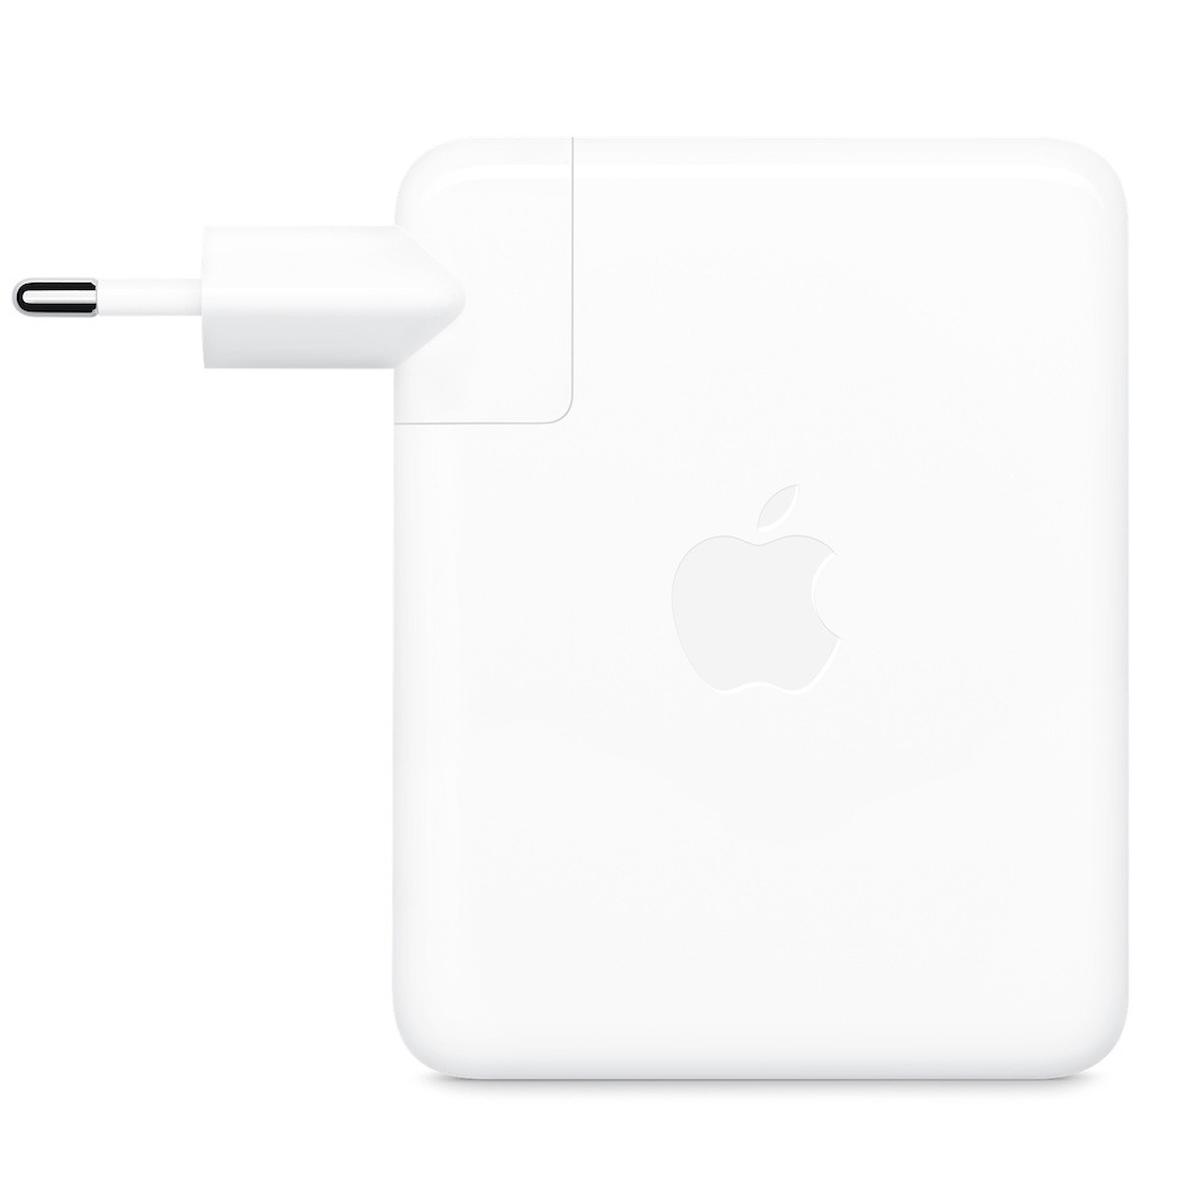 Apple Mlyu3tu/a iPhone USB Kablolu 5 W 1 Amper Şarj Aleti Beyaz